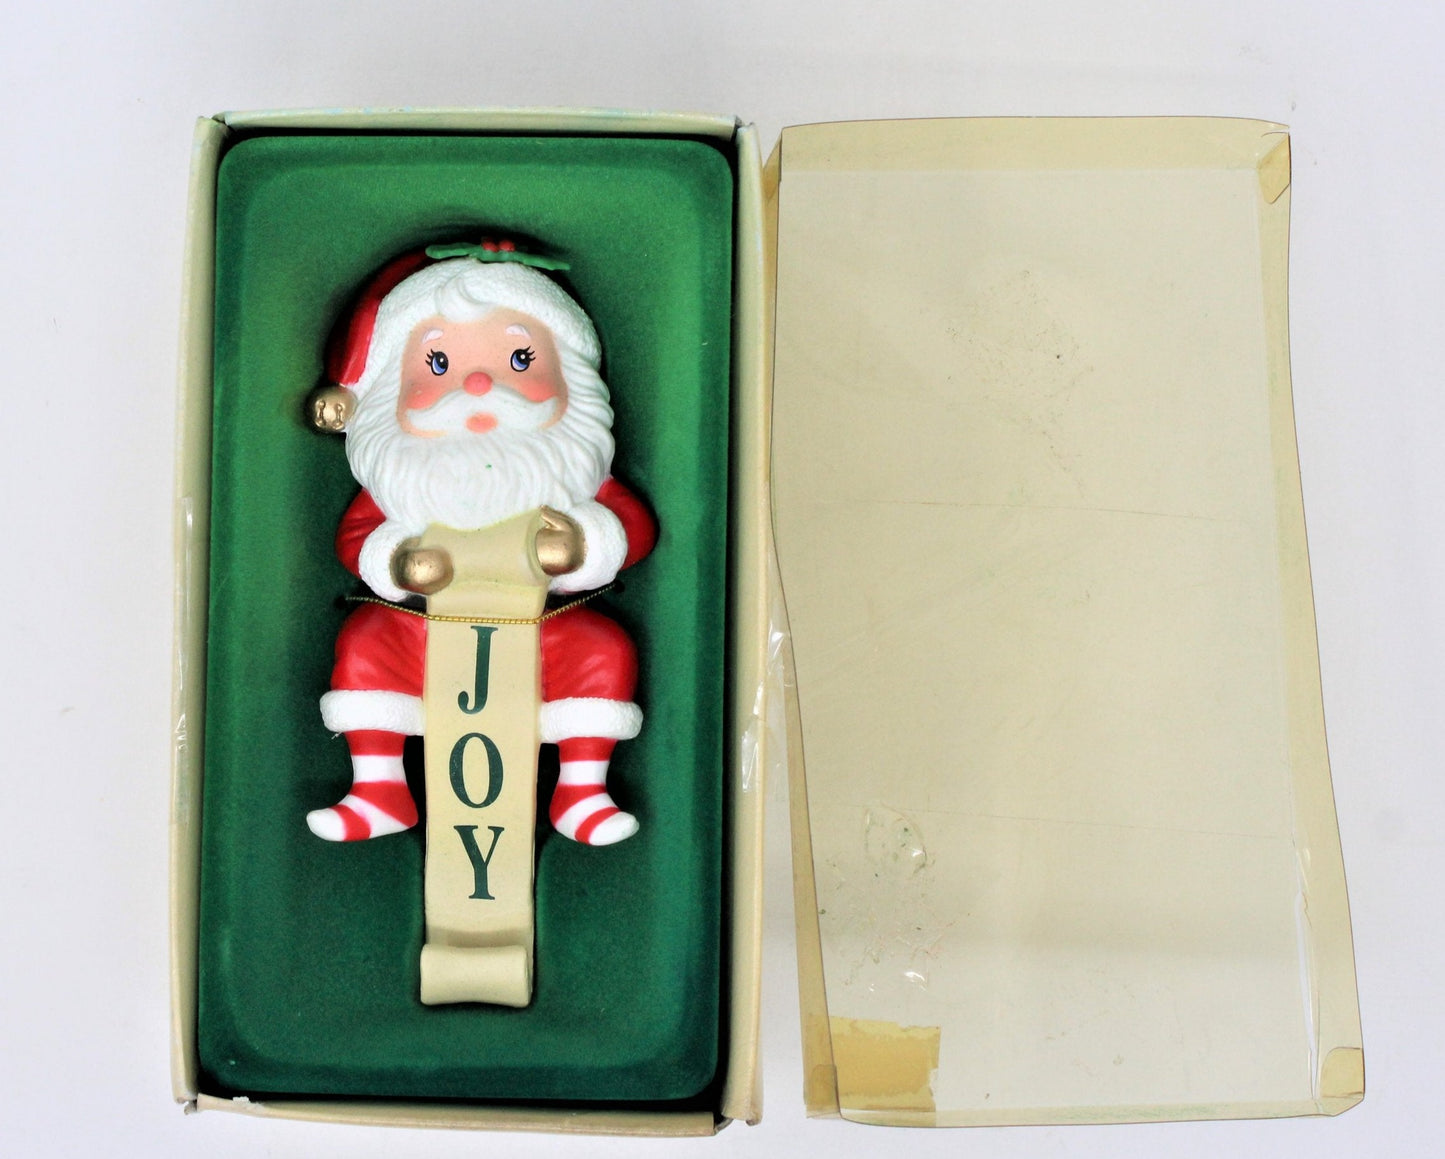 Stocking Hanger, Russ Berrie 4660, Santa Joy, Vintage, Hong Kong